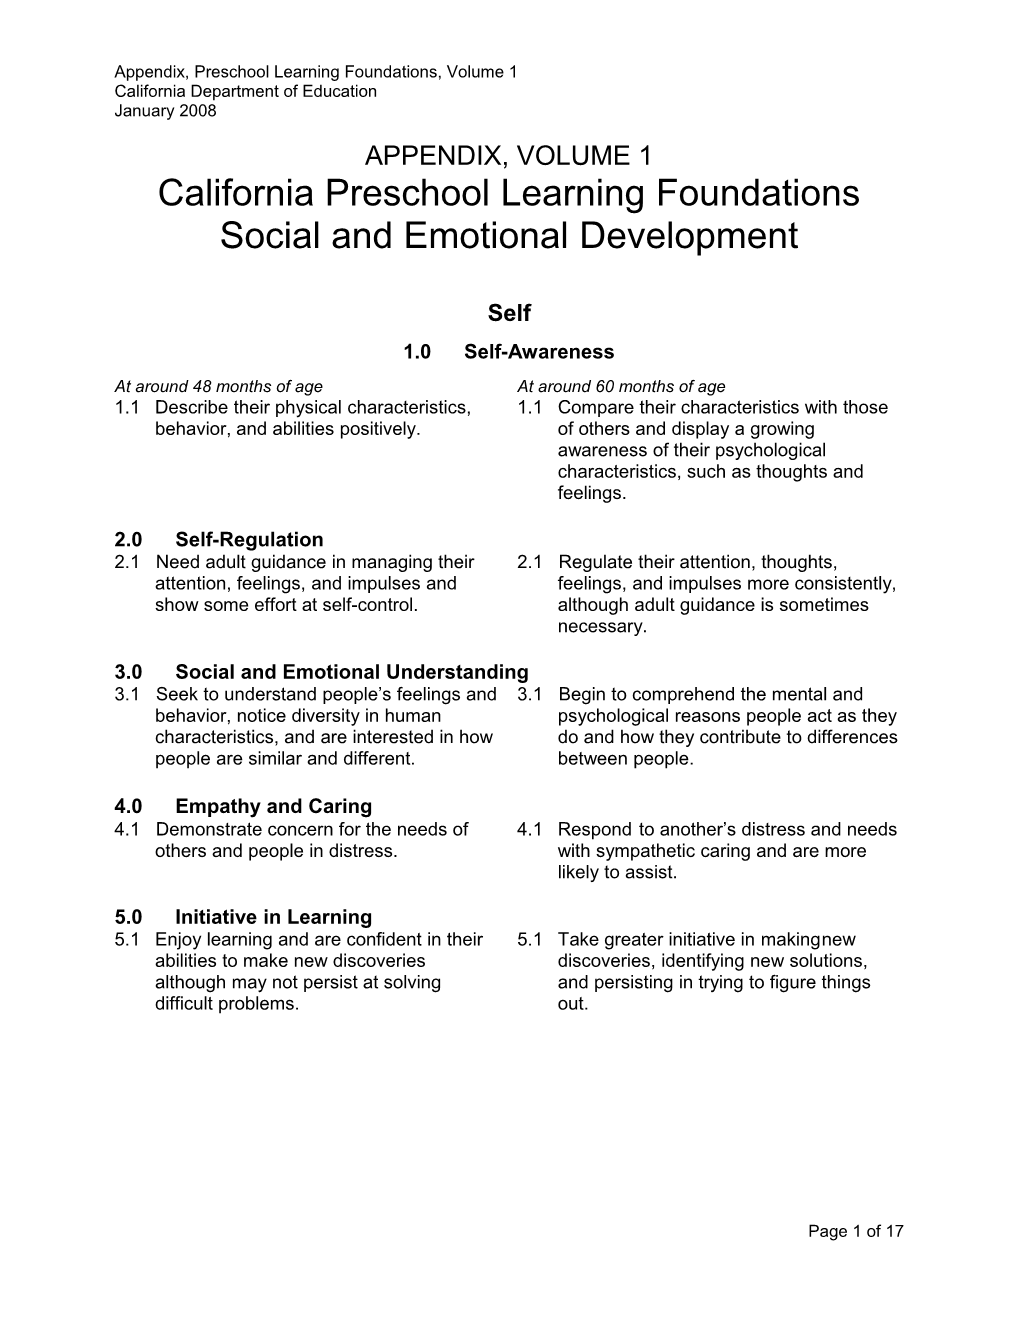 APP-08: Foundations Vol. 1 - Child Development (CA Dept of Education)